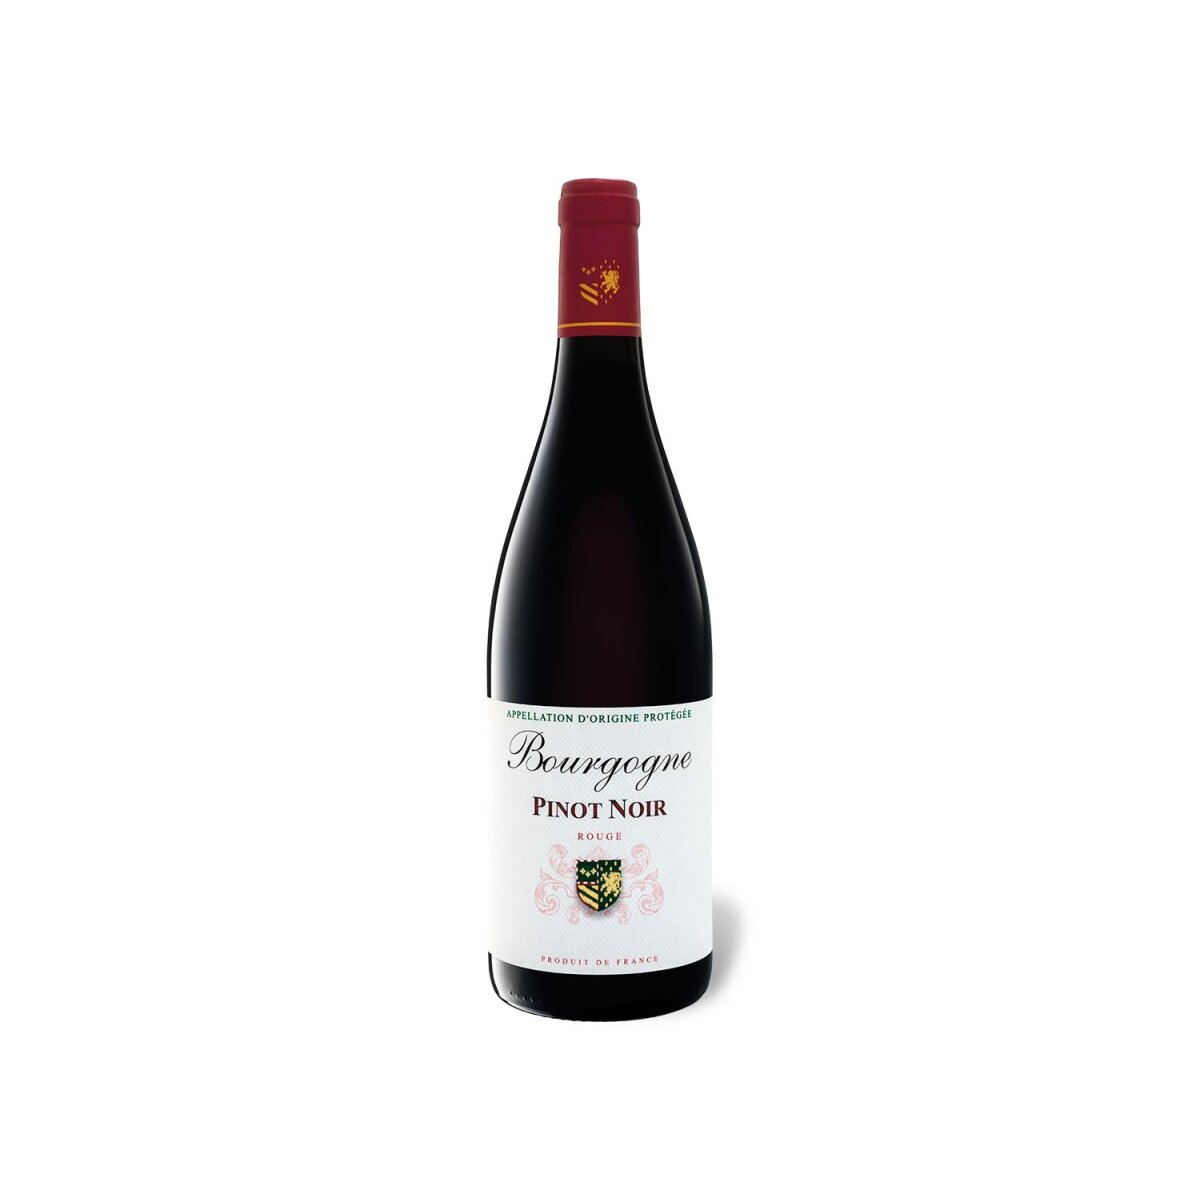 10,99 € Noir 2018, Pinot trocken, Rotwein AOP Bourgogne